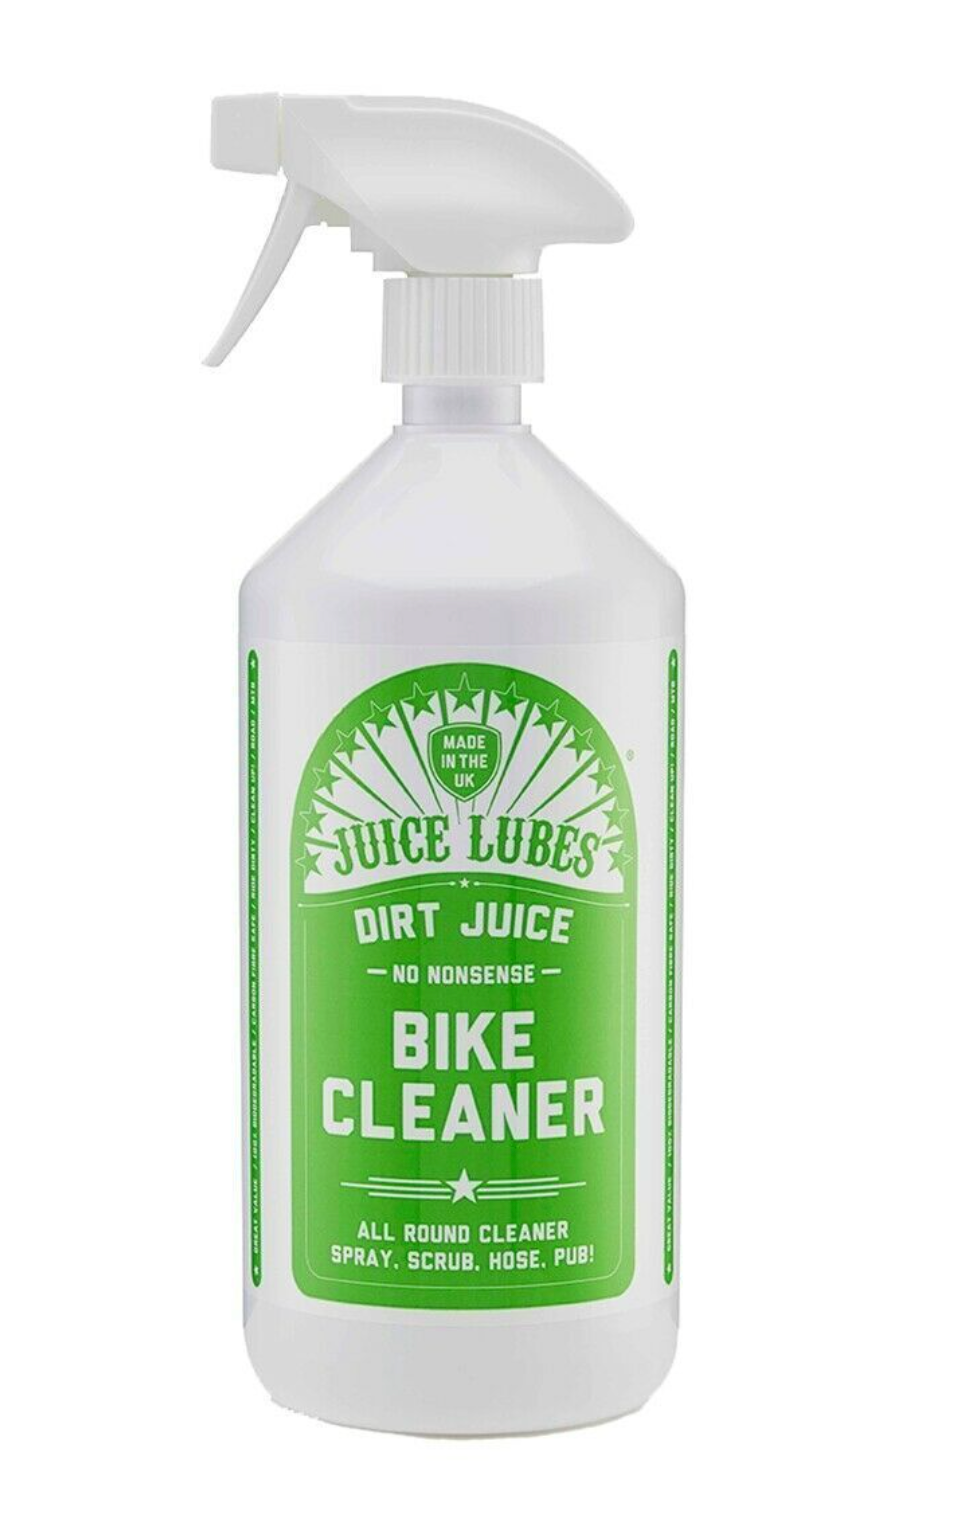 Juice Lubes Dirt Juice Bike Cleaner 1ltr.